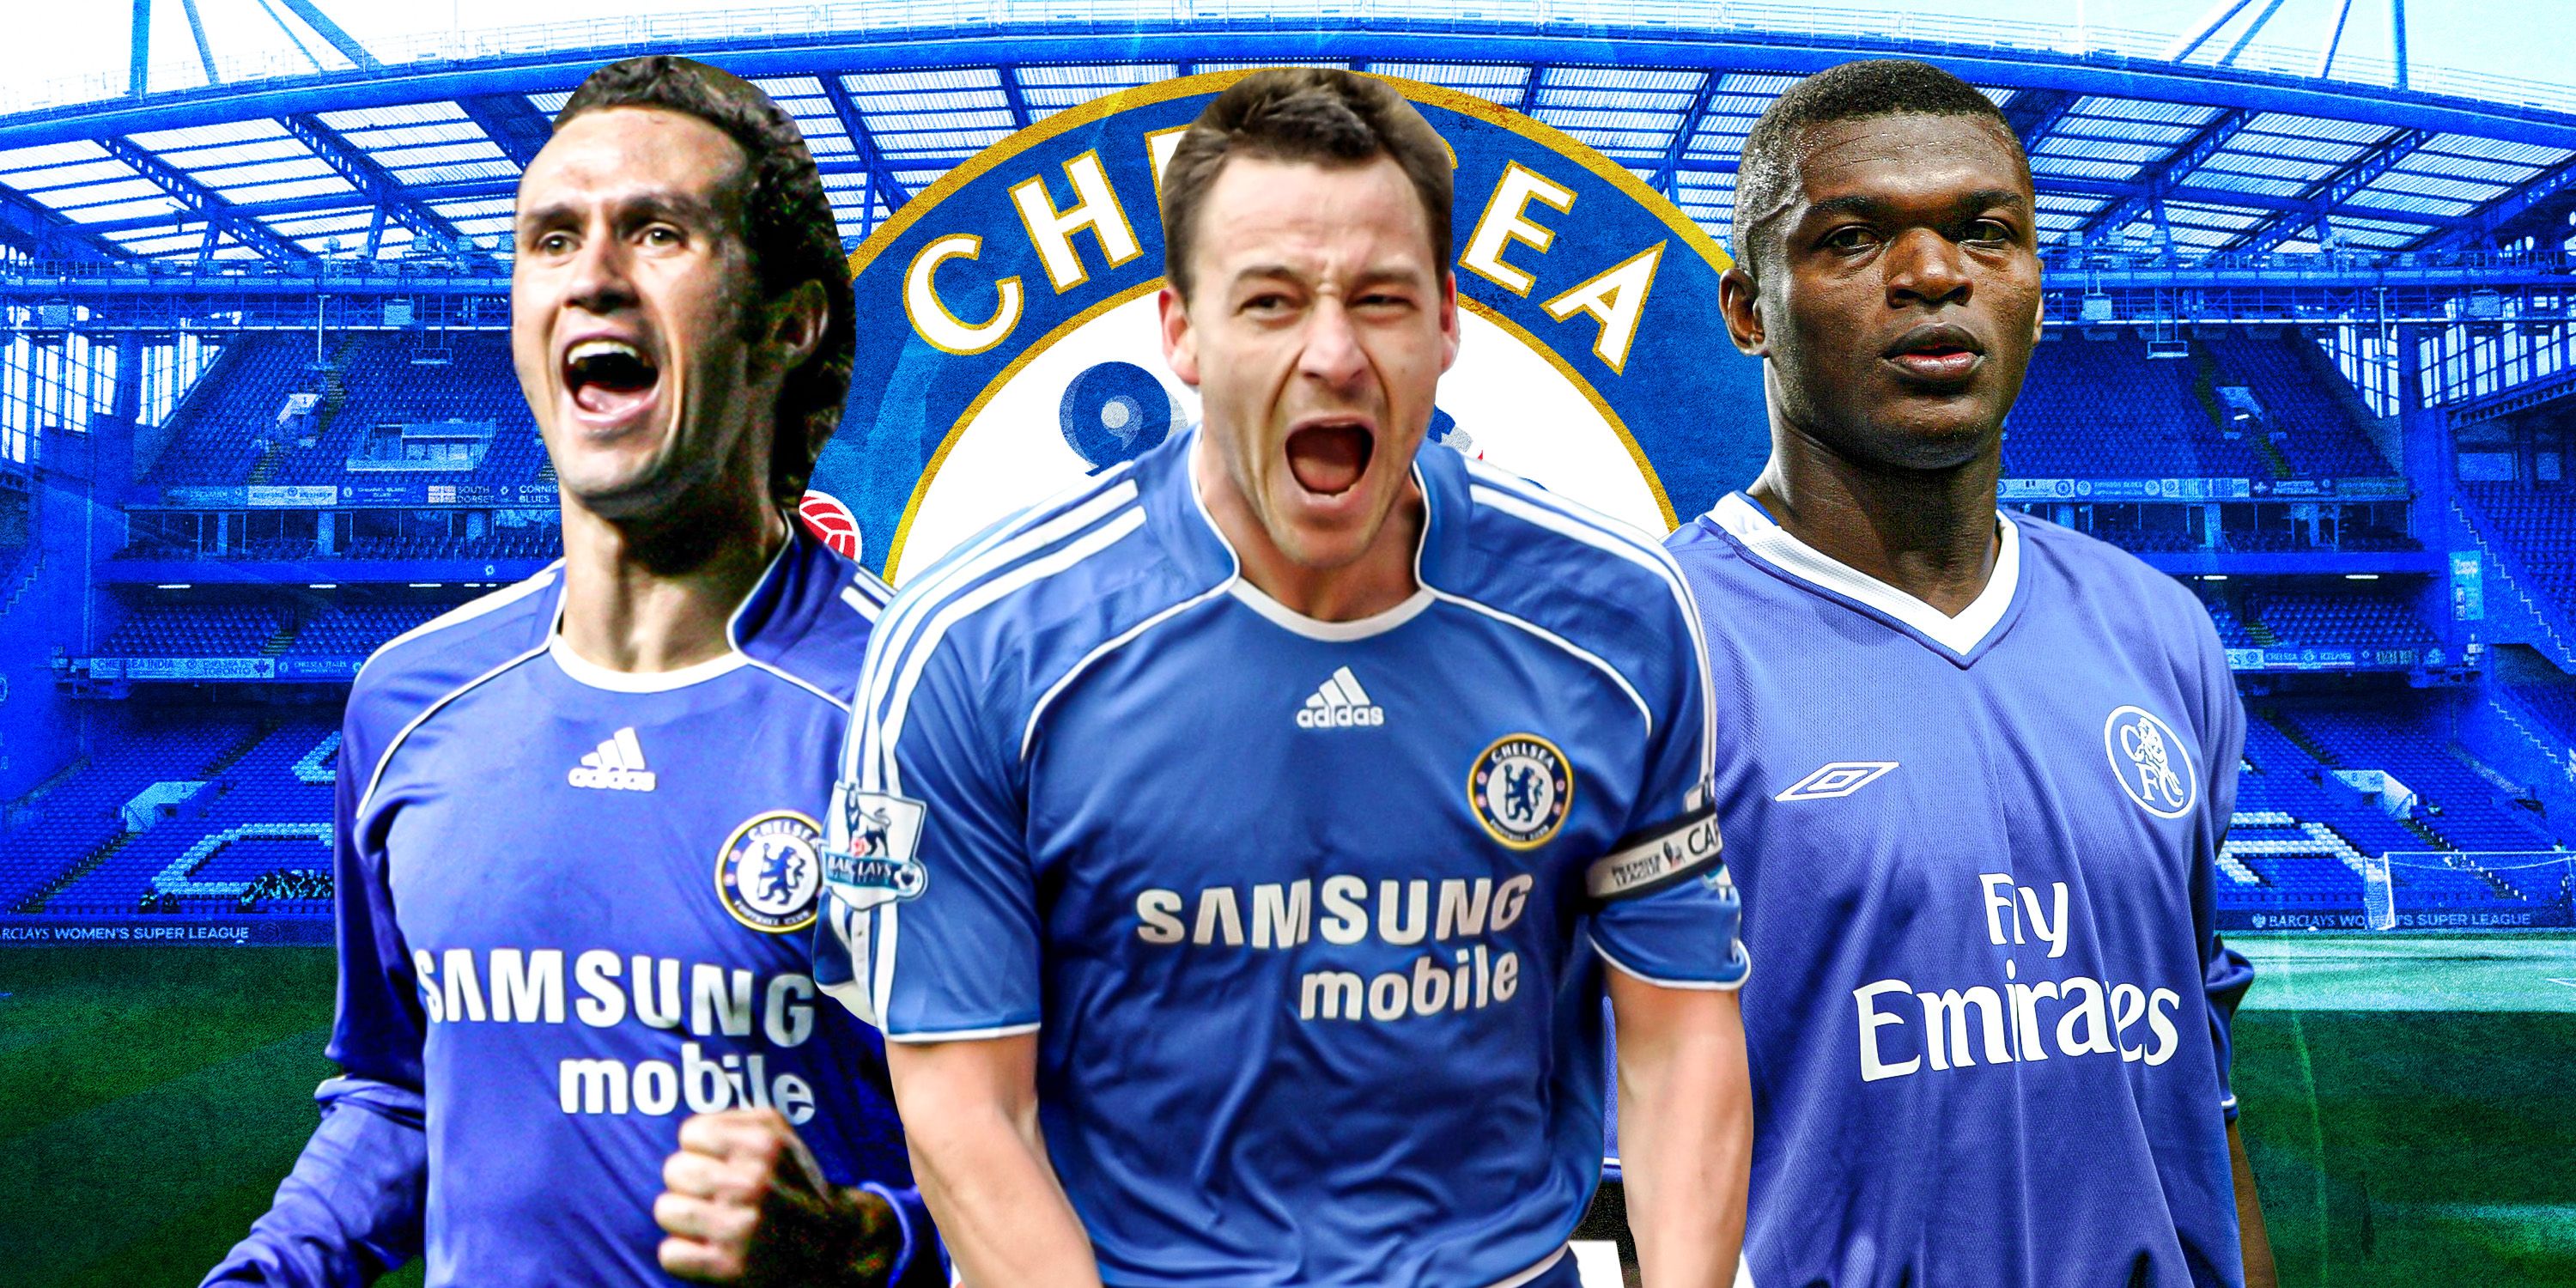 Chelsea defenders John Terry, Ricardo Carvalho and Marcel Desailly